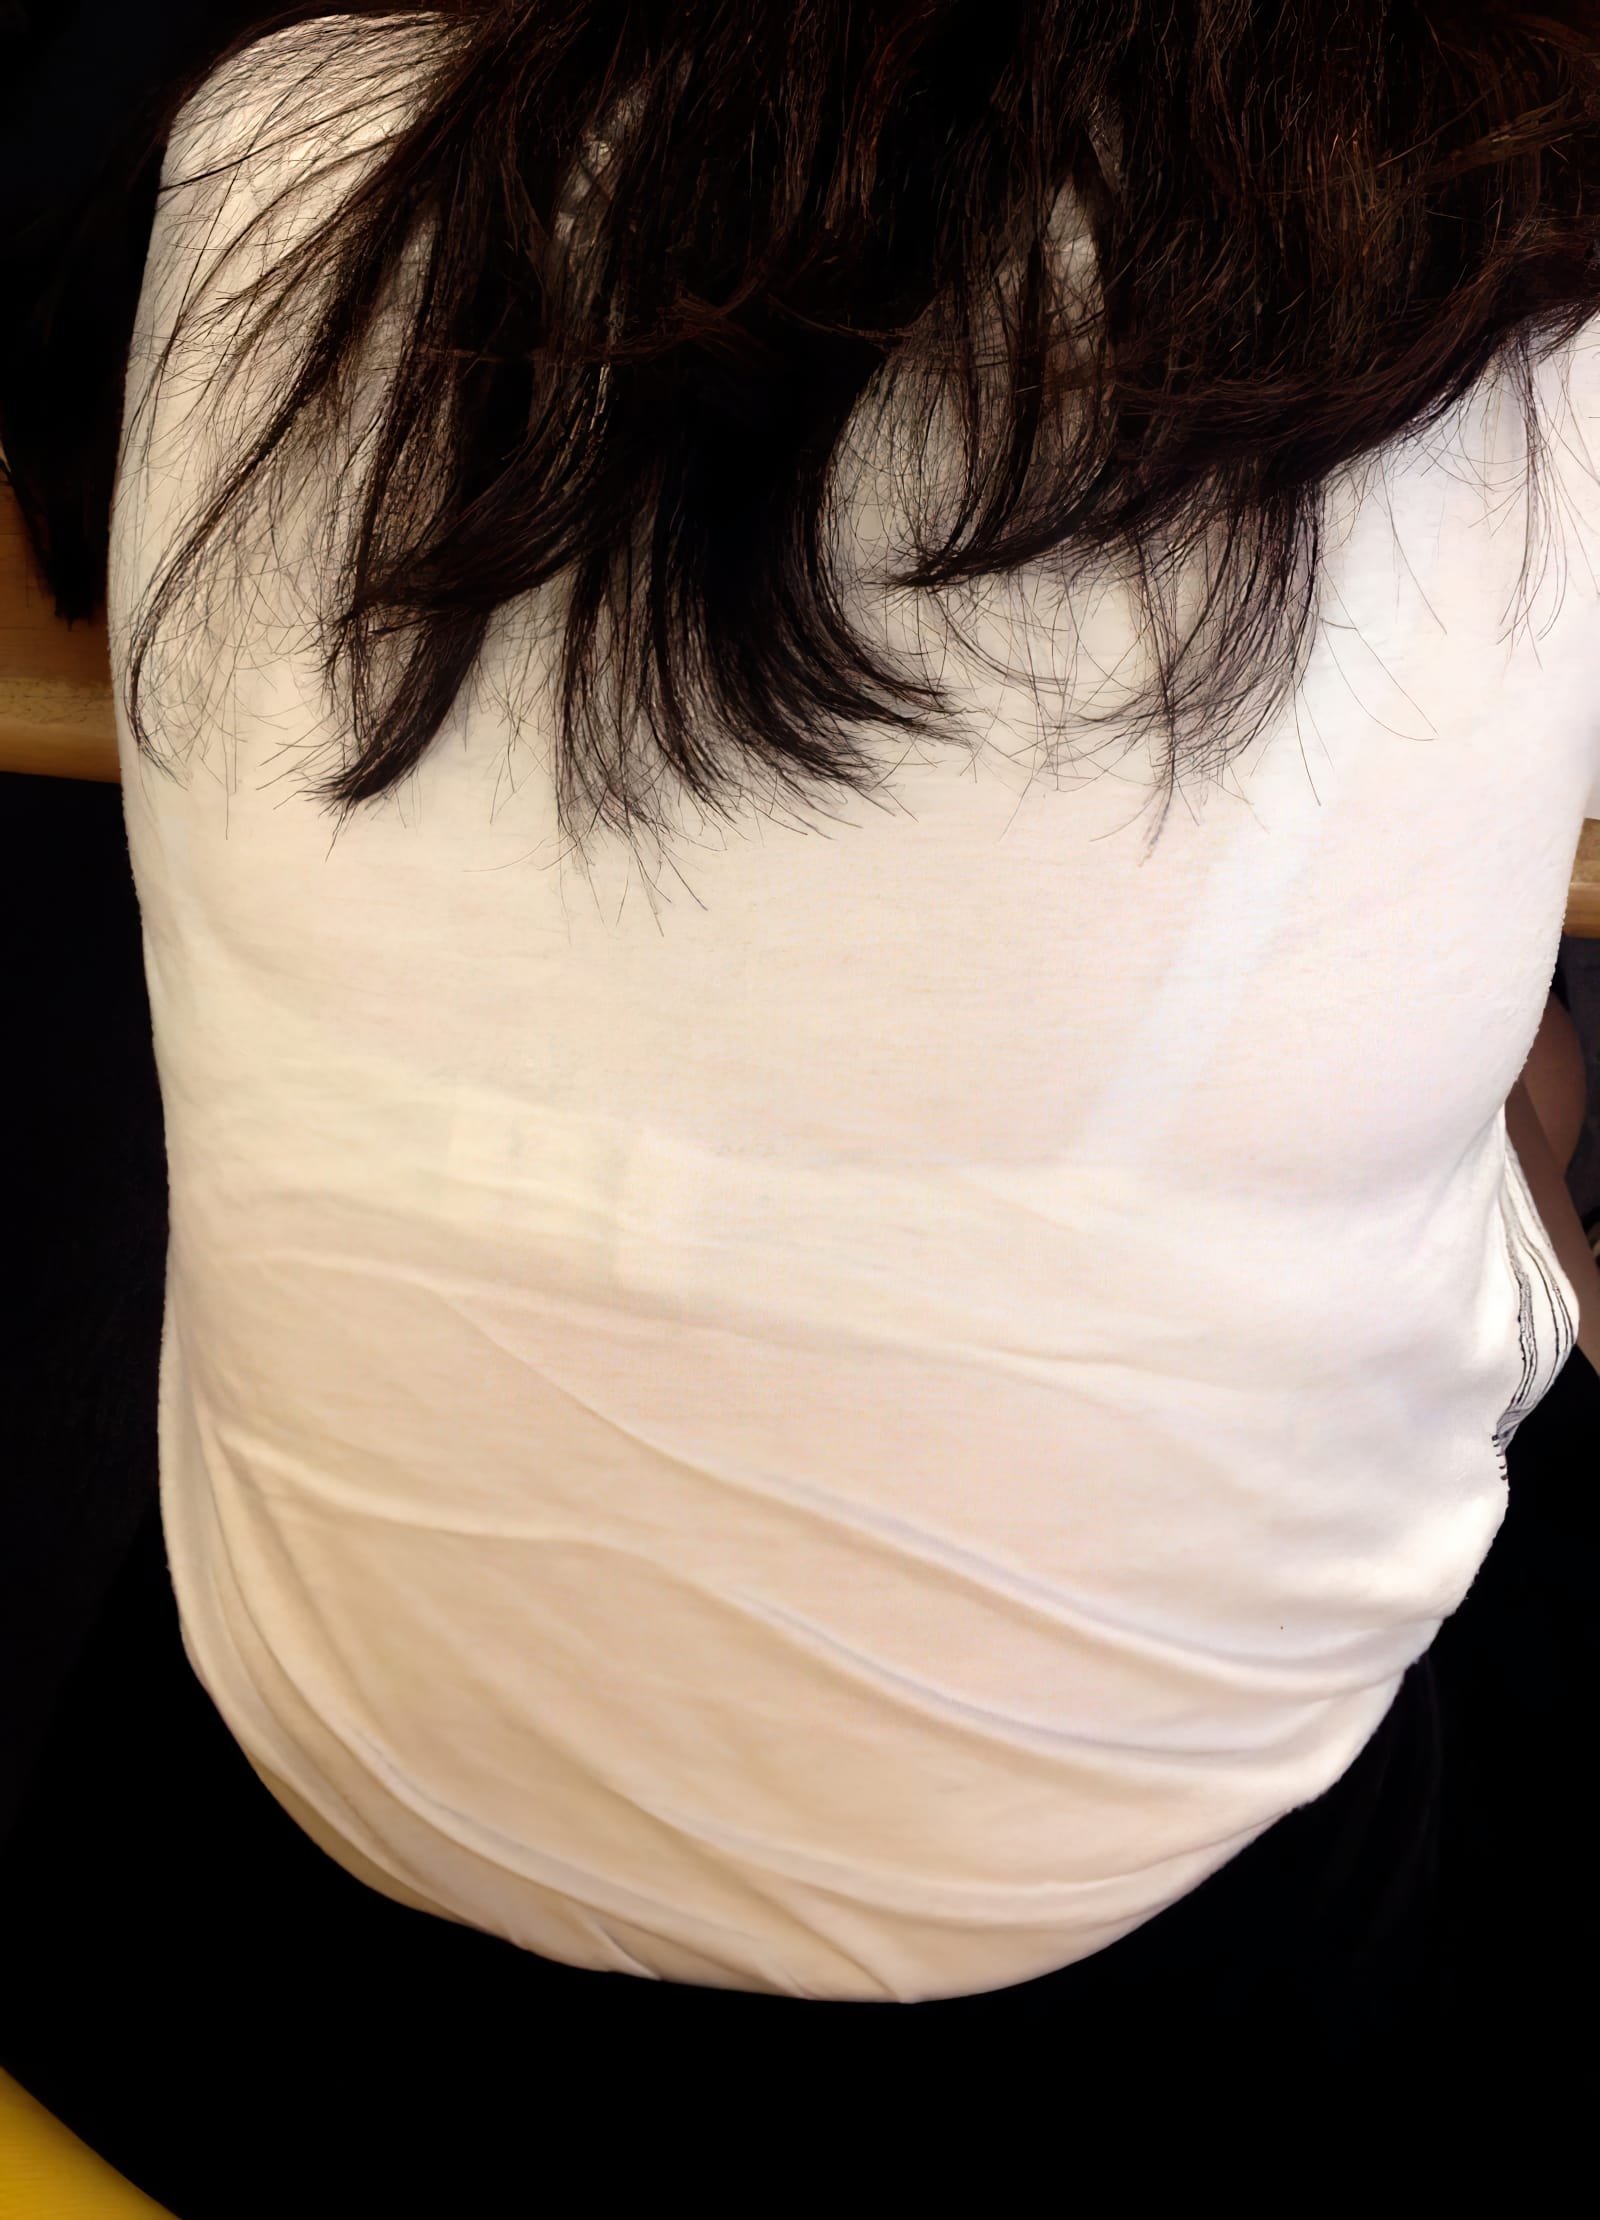 Yシャツを着用している女性のエロ画像 027